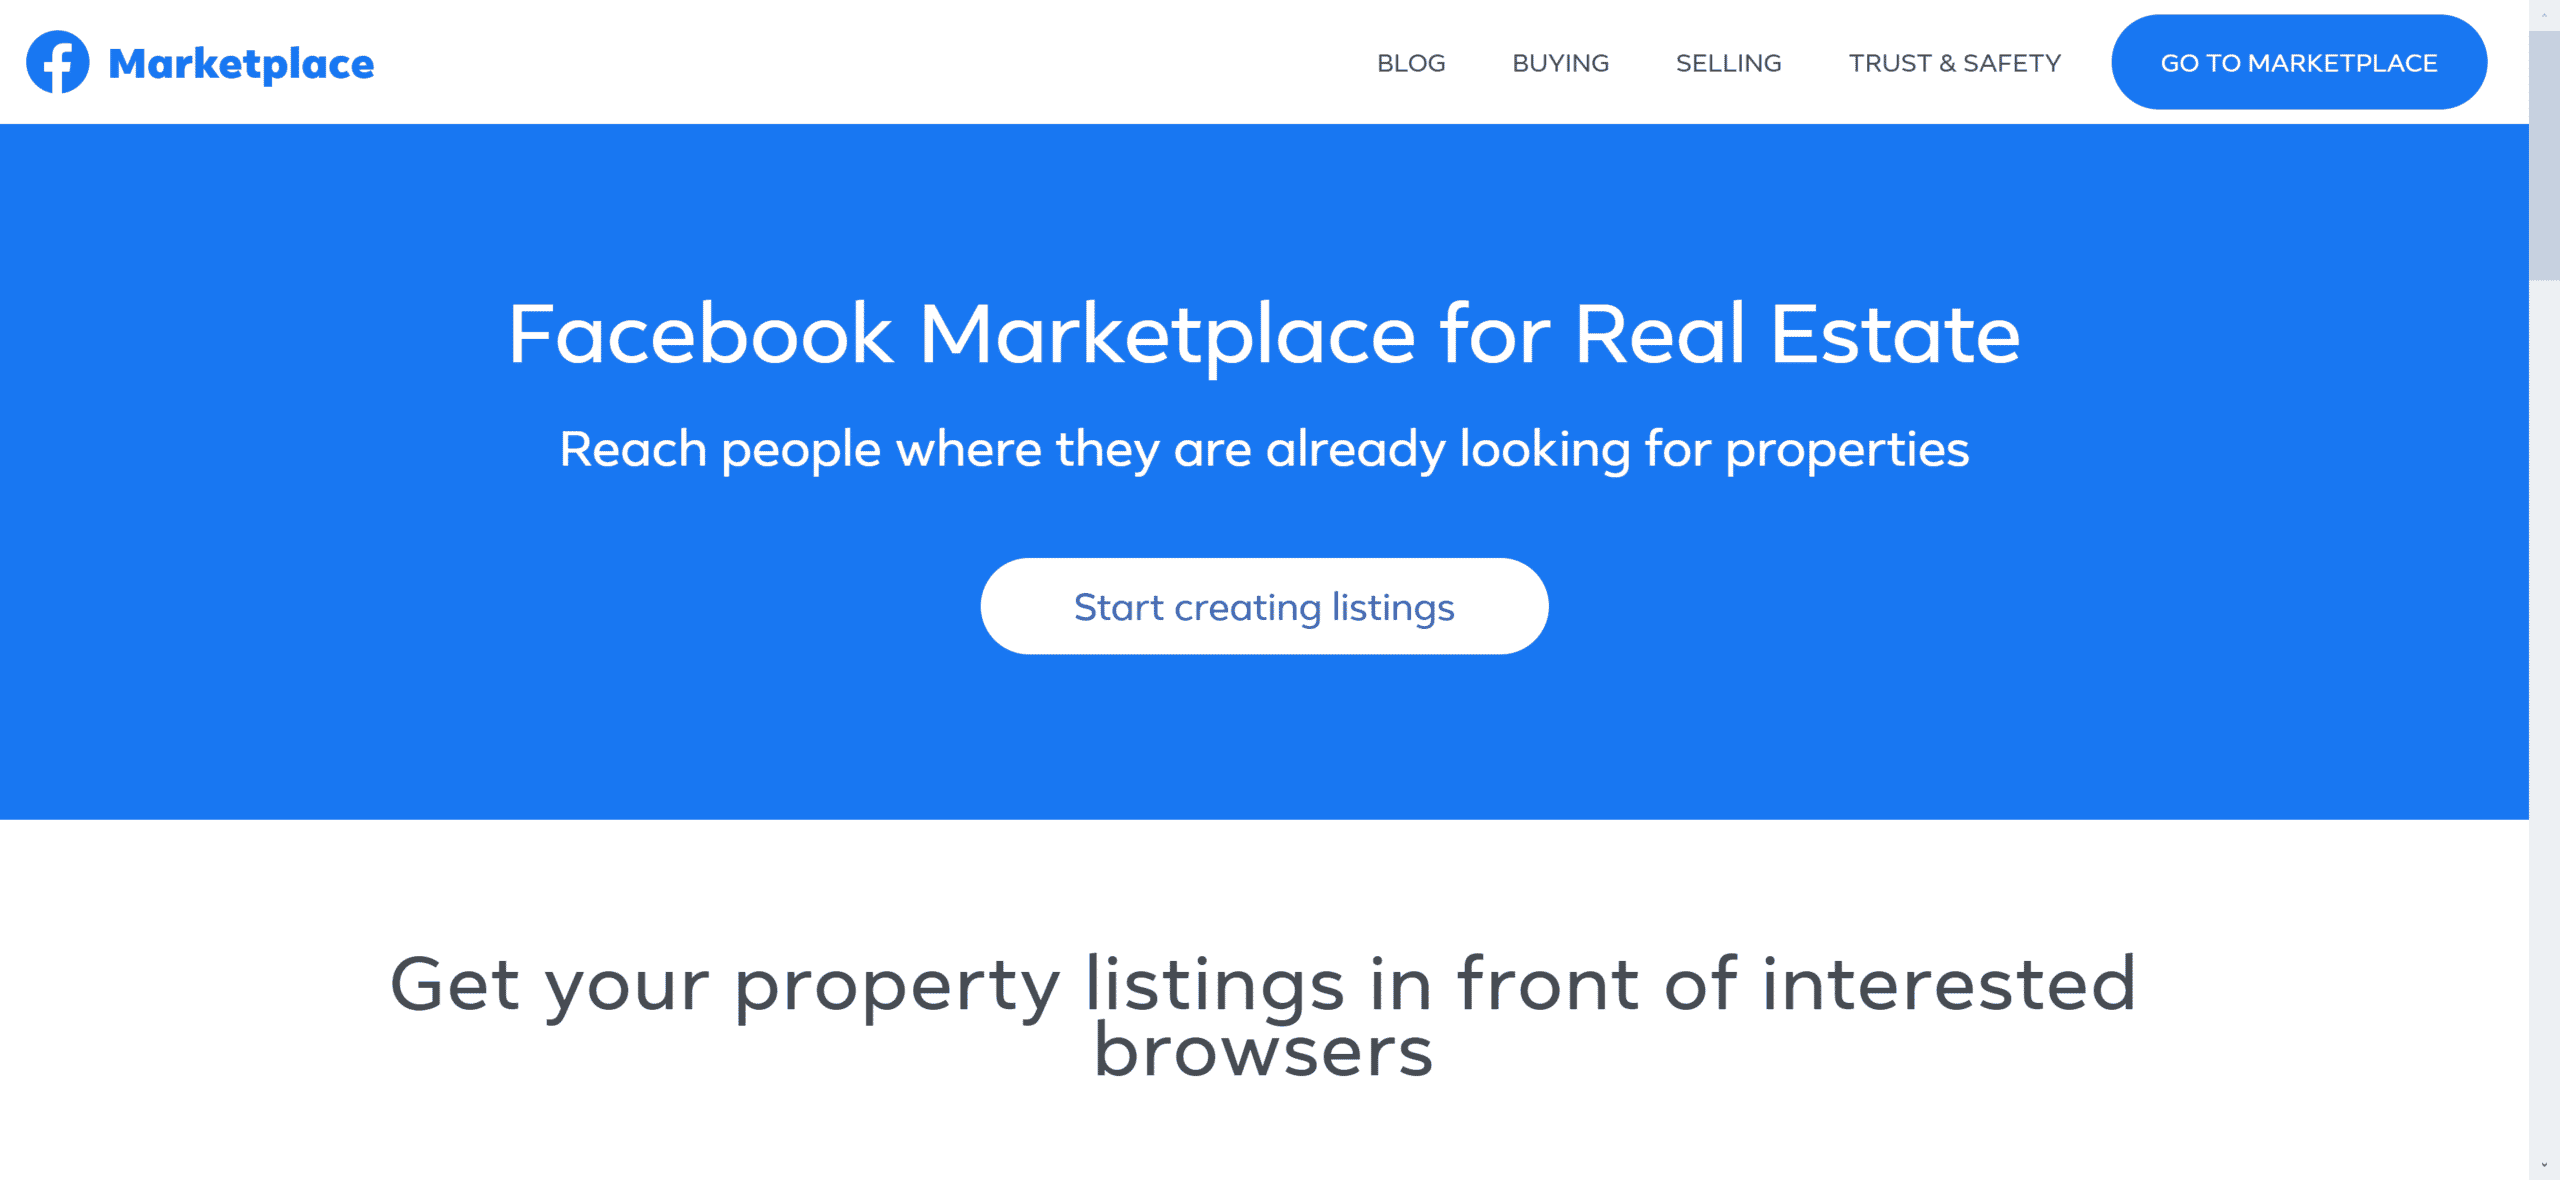 facebook marketplace for real estate